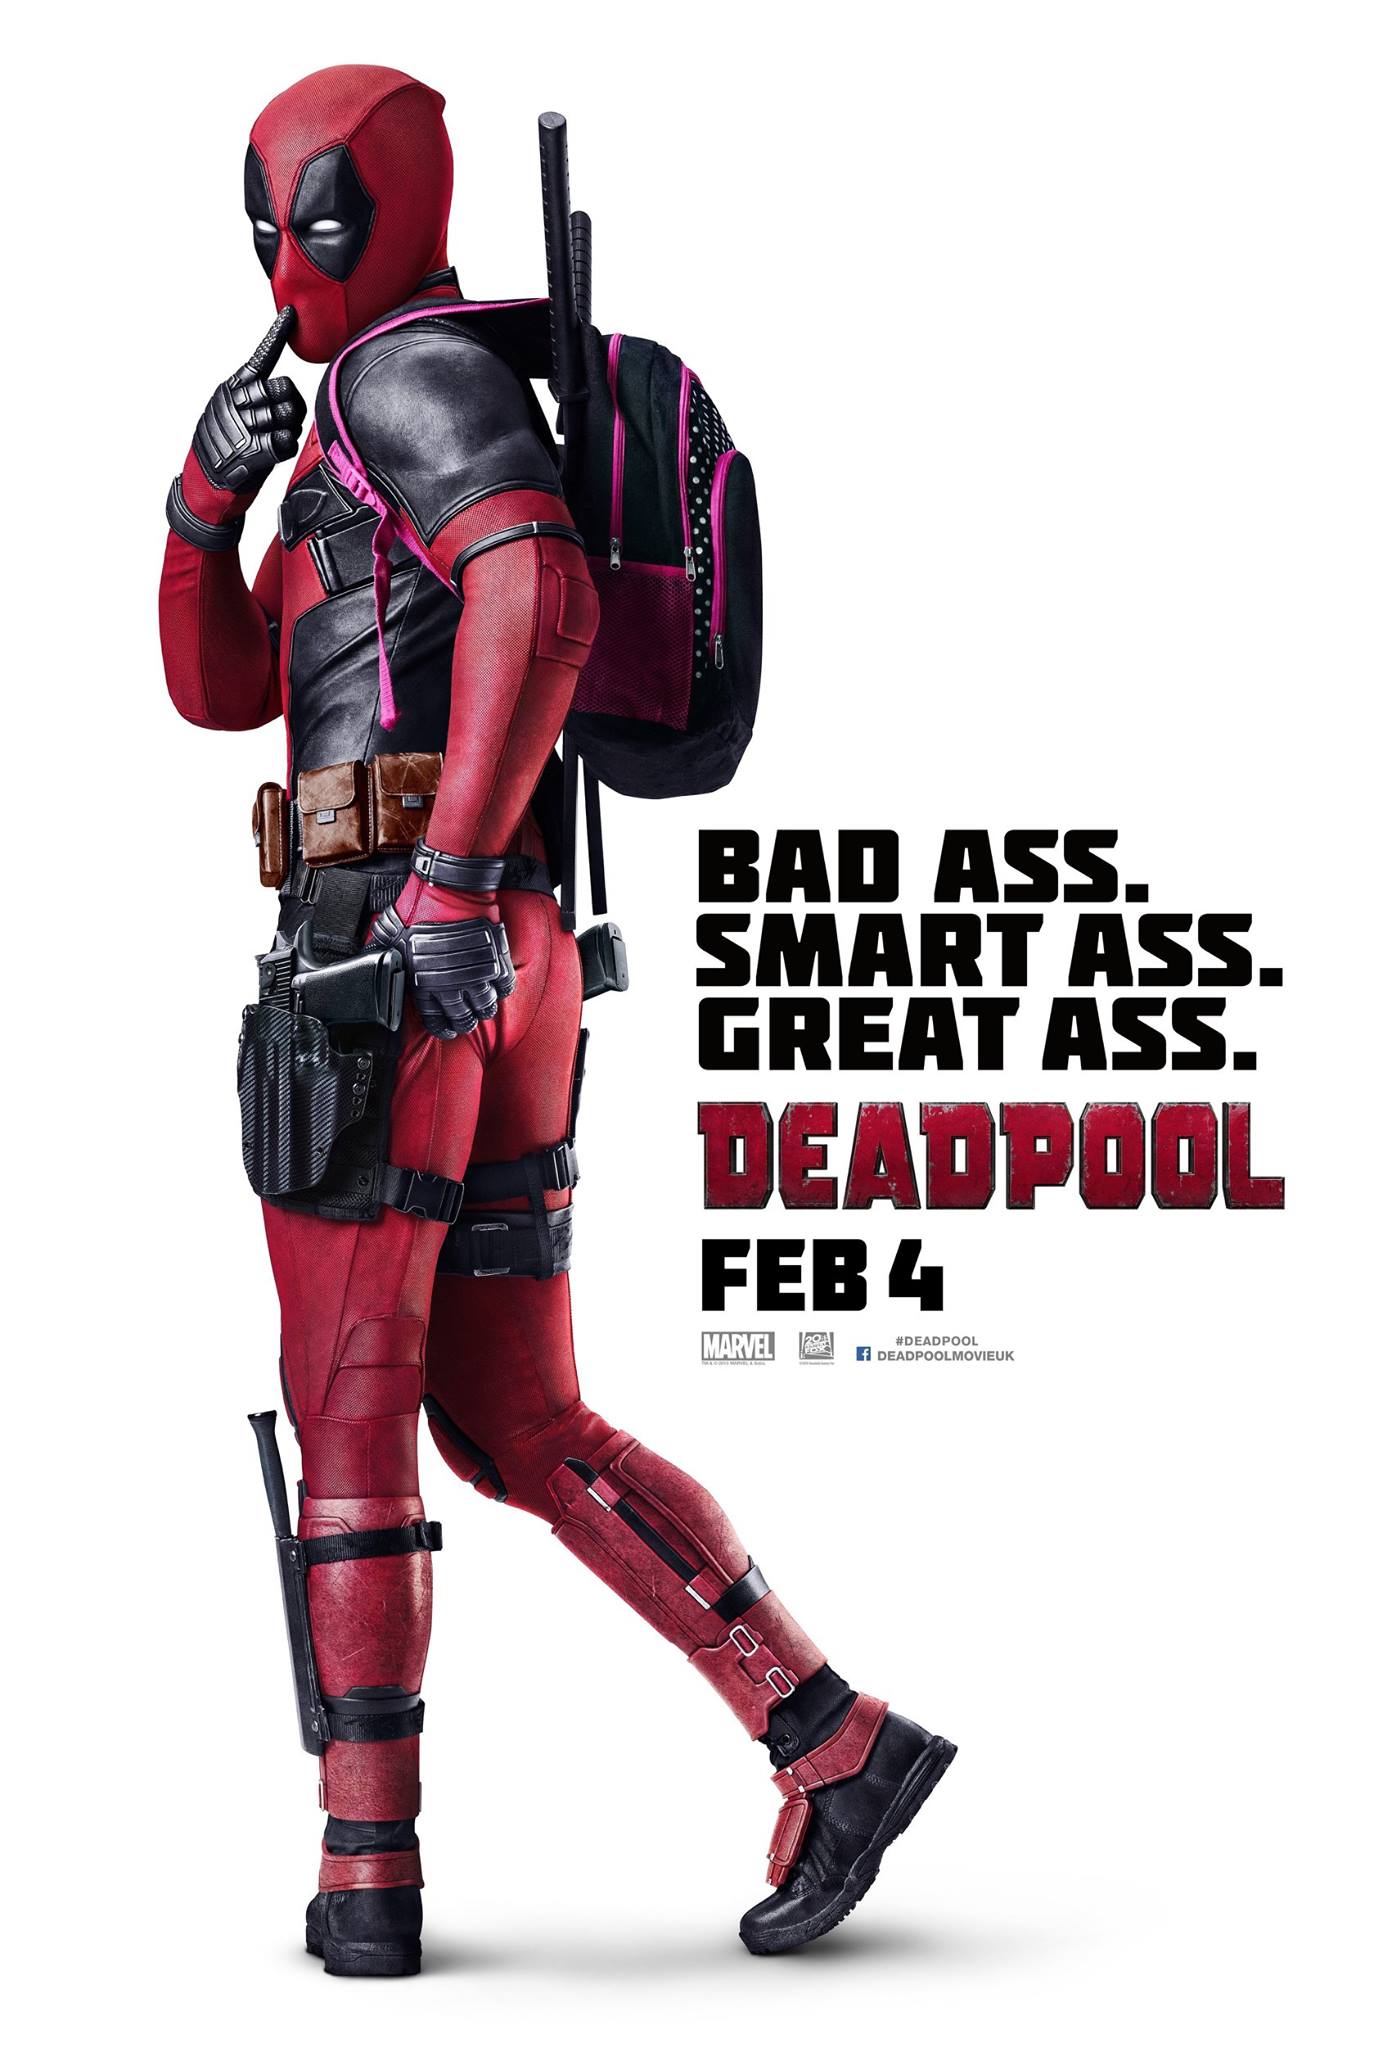 Deadpool-Poster-Dec1st.jpg